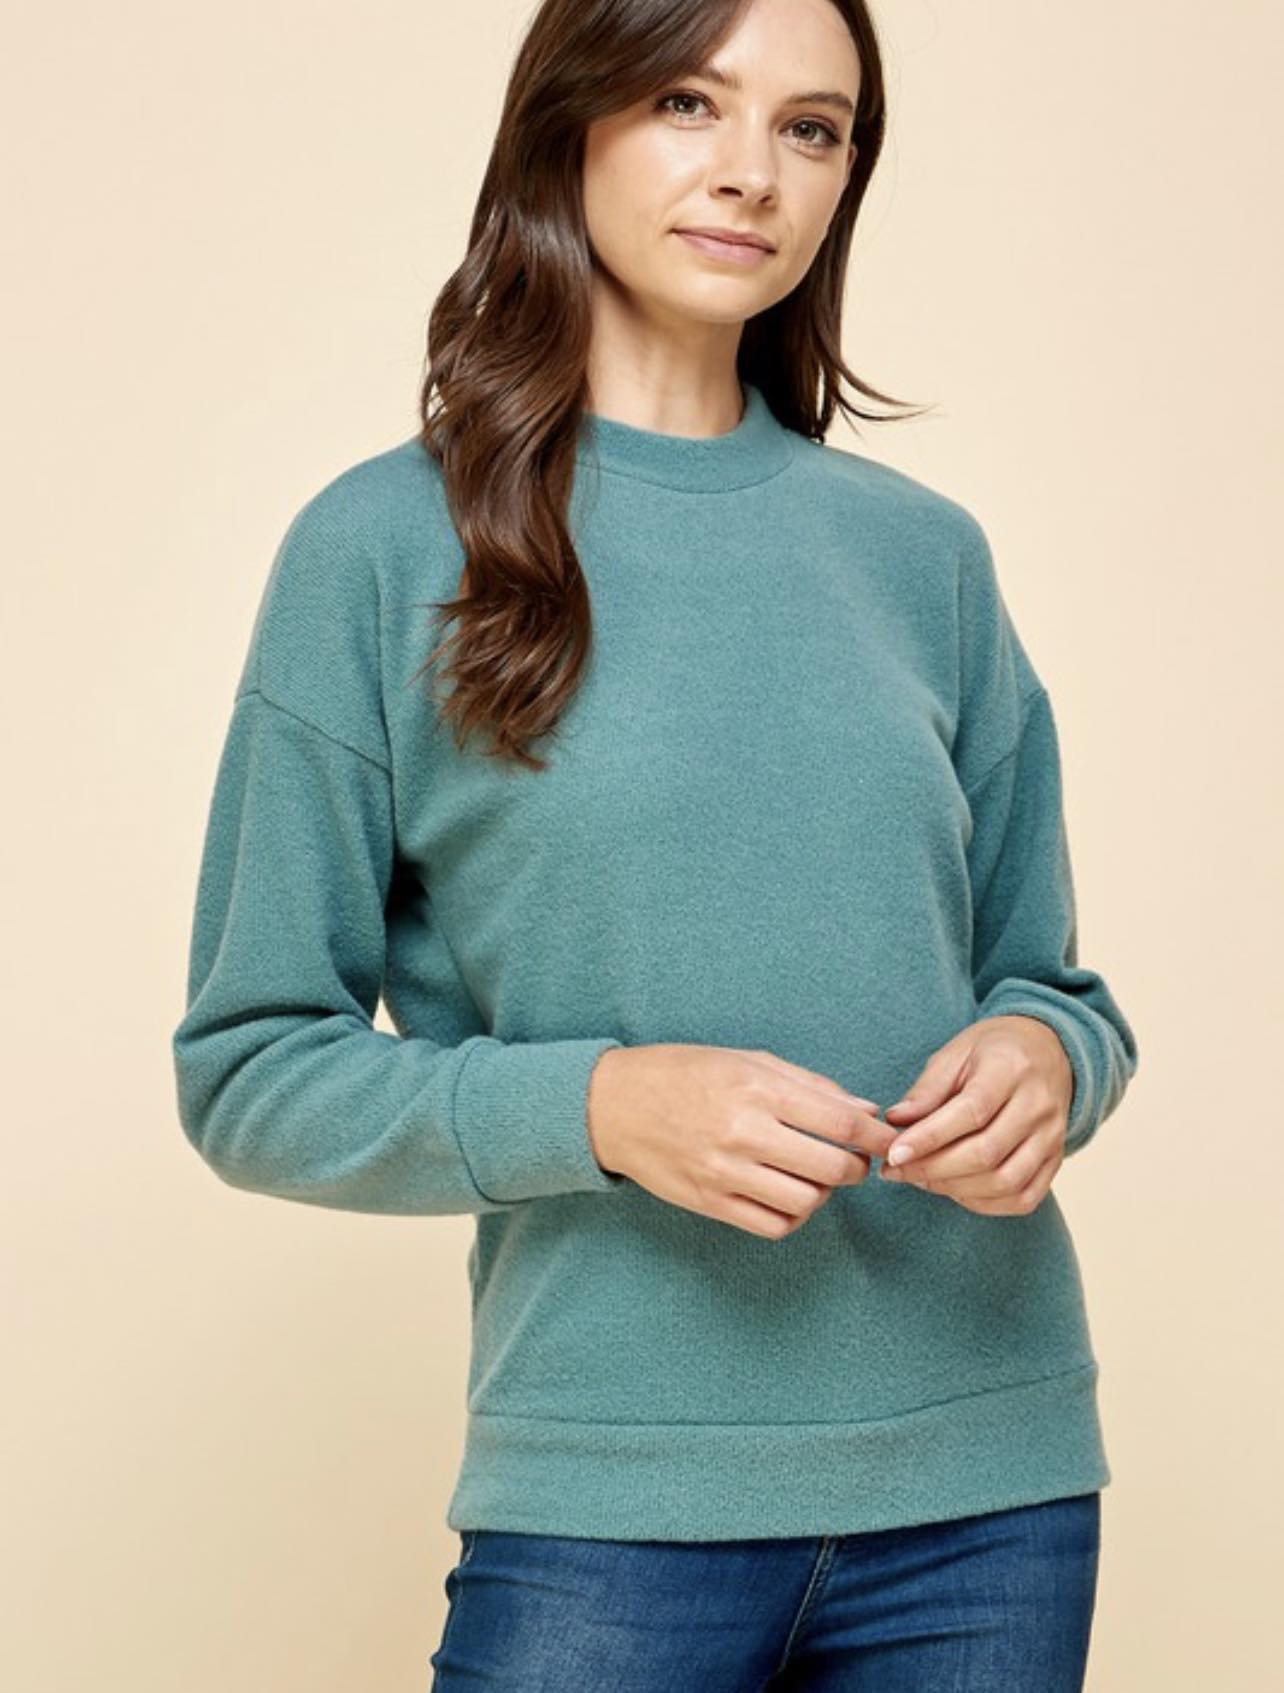 Long sleeve knit top - aqua